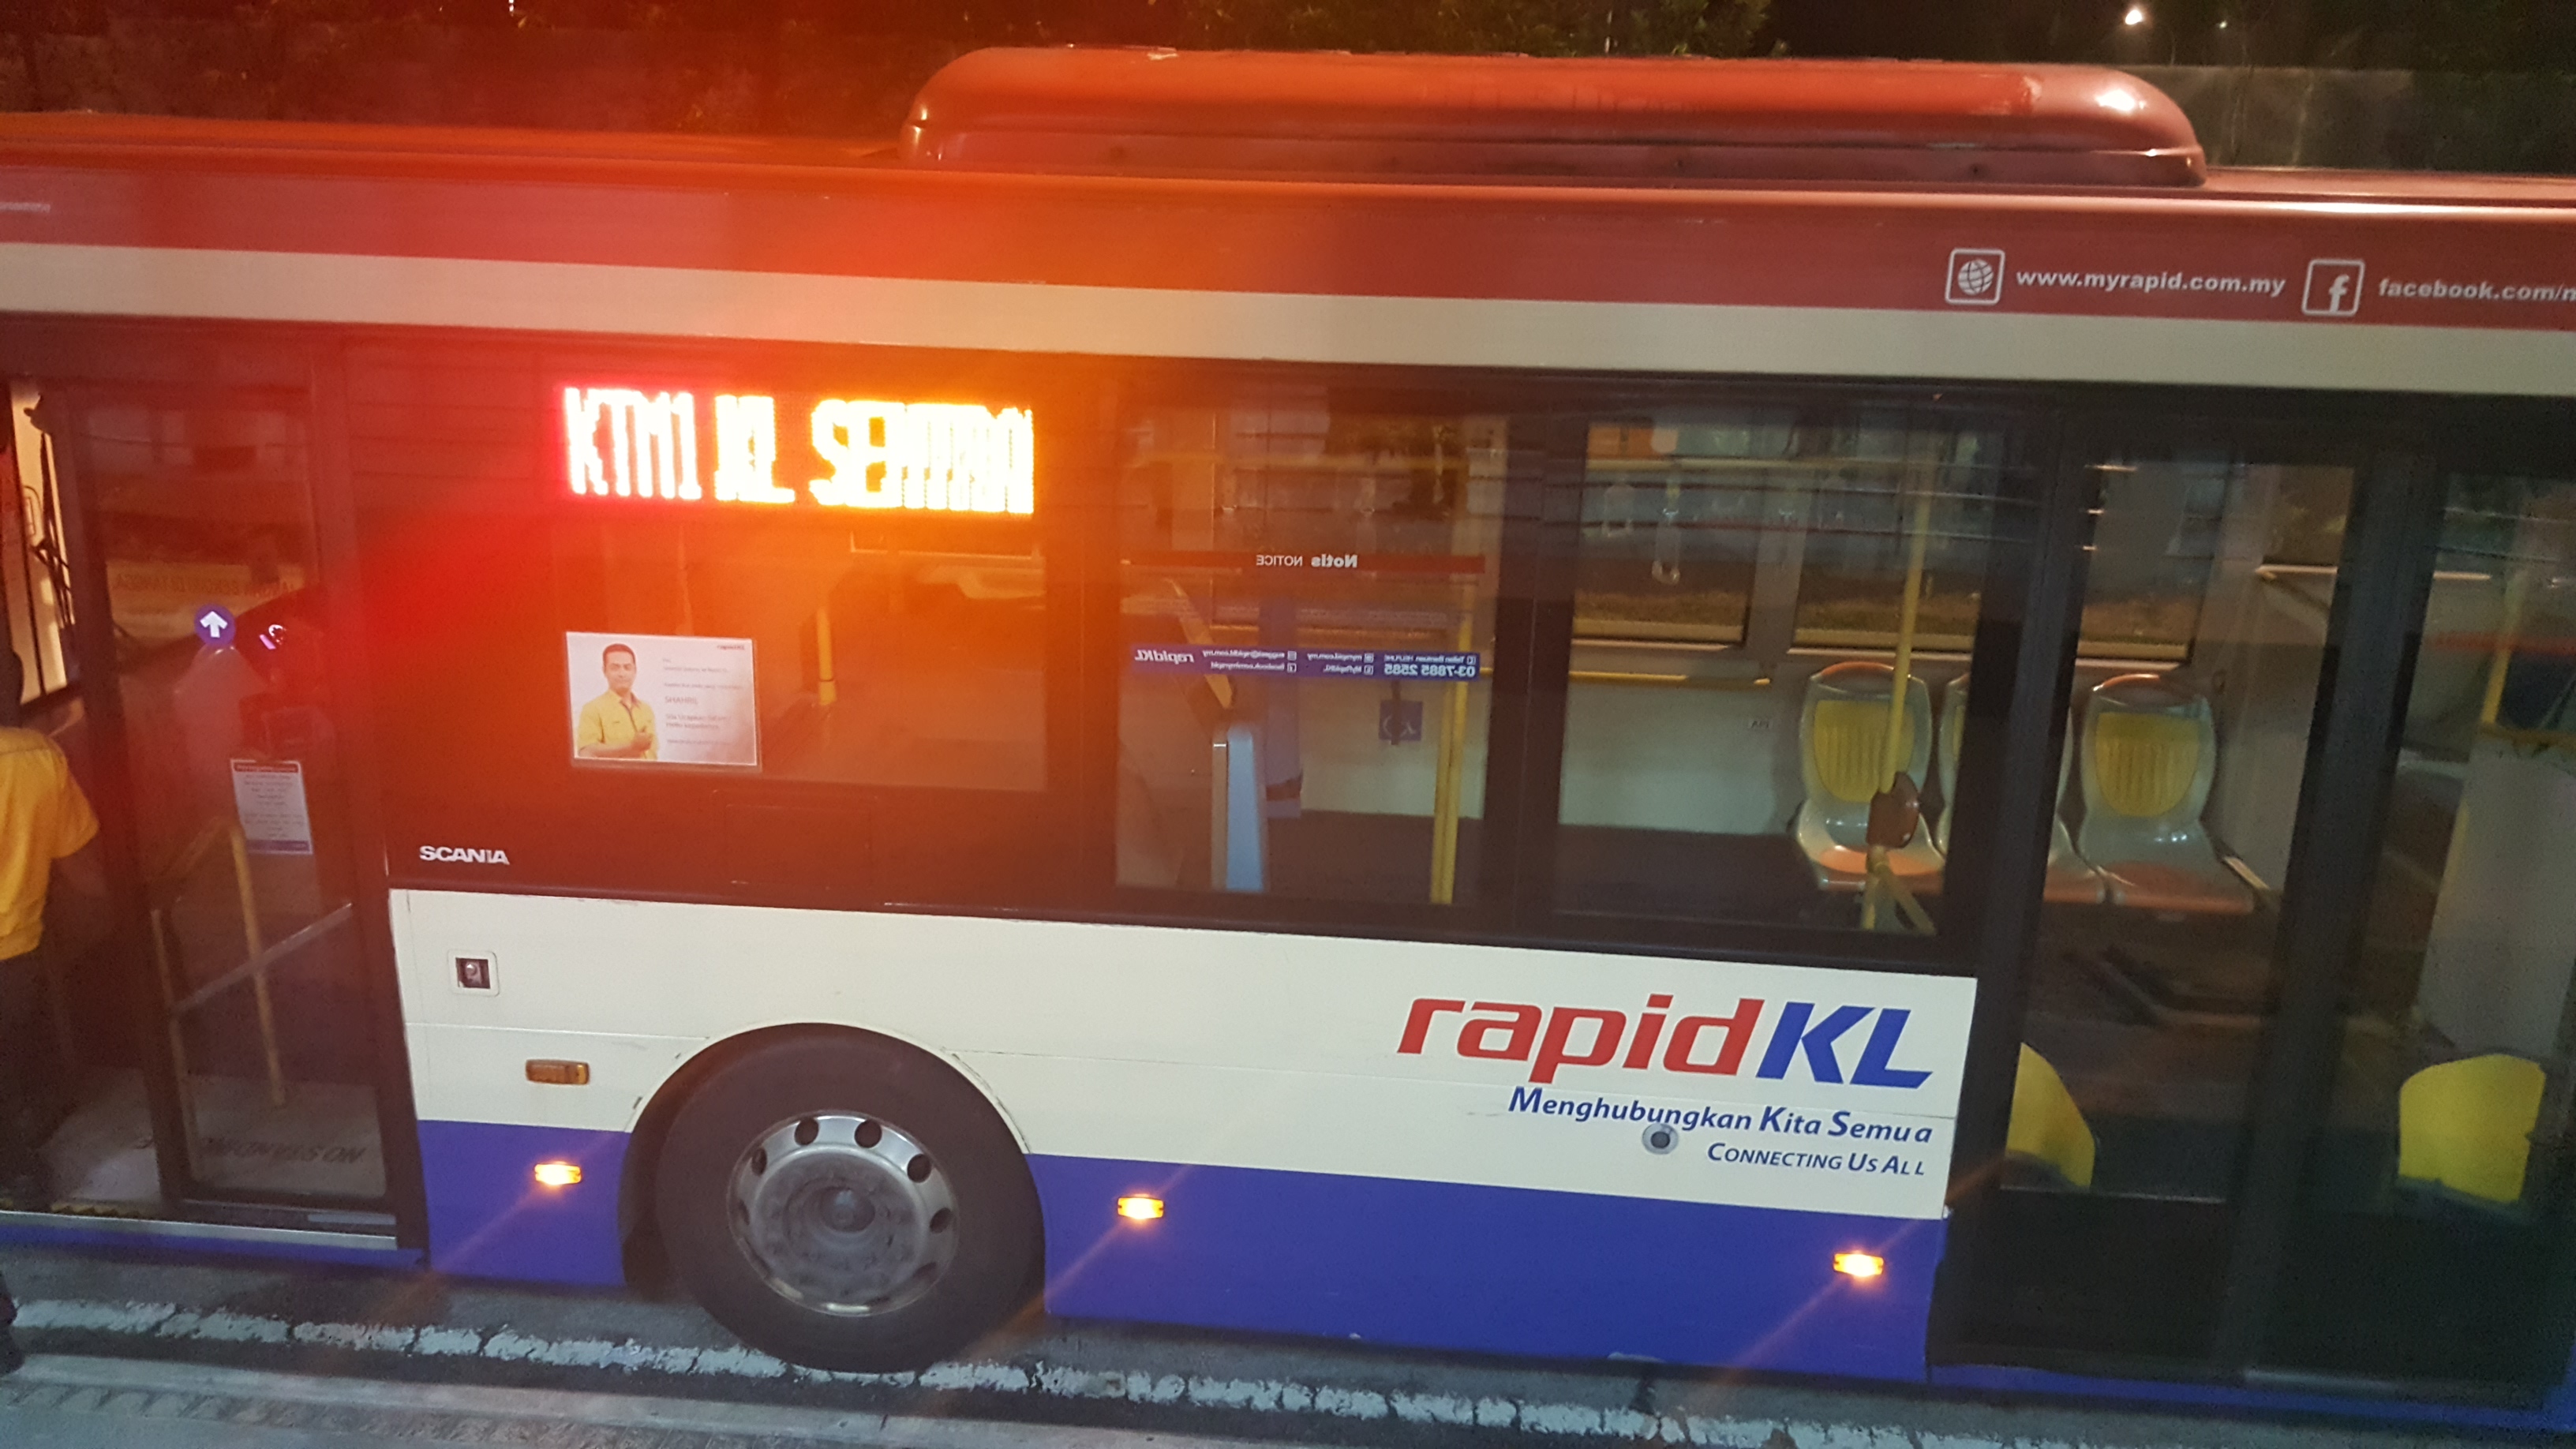 Rapid KL Bus to Sentul Station from KL Sentral